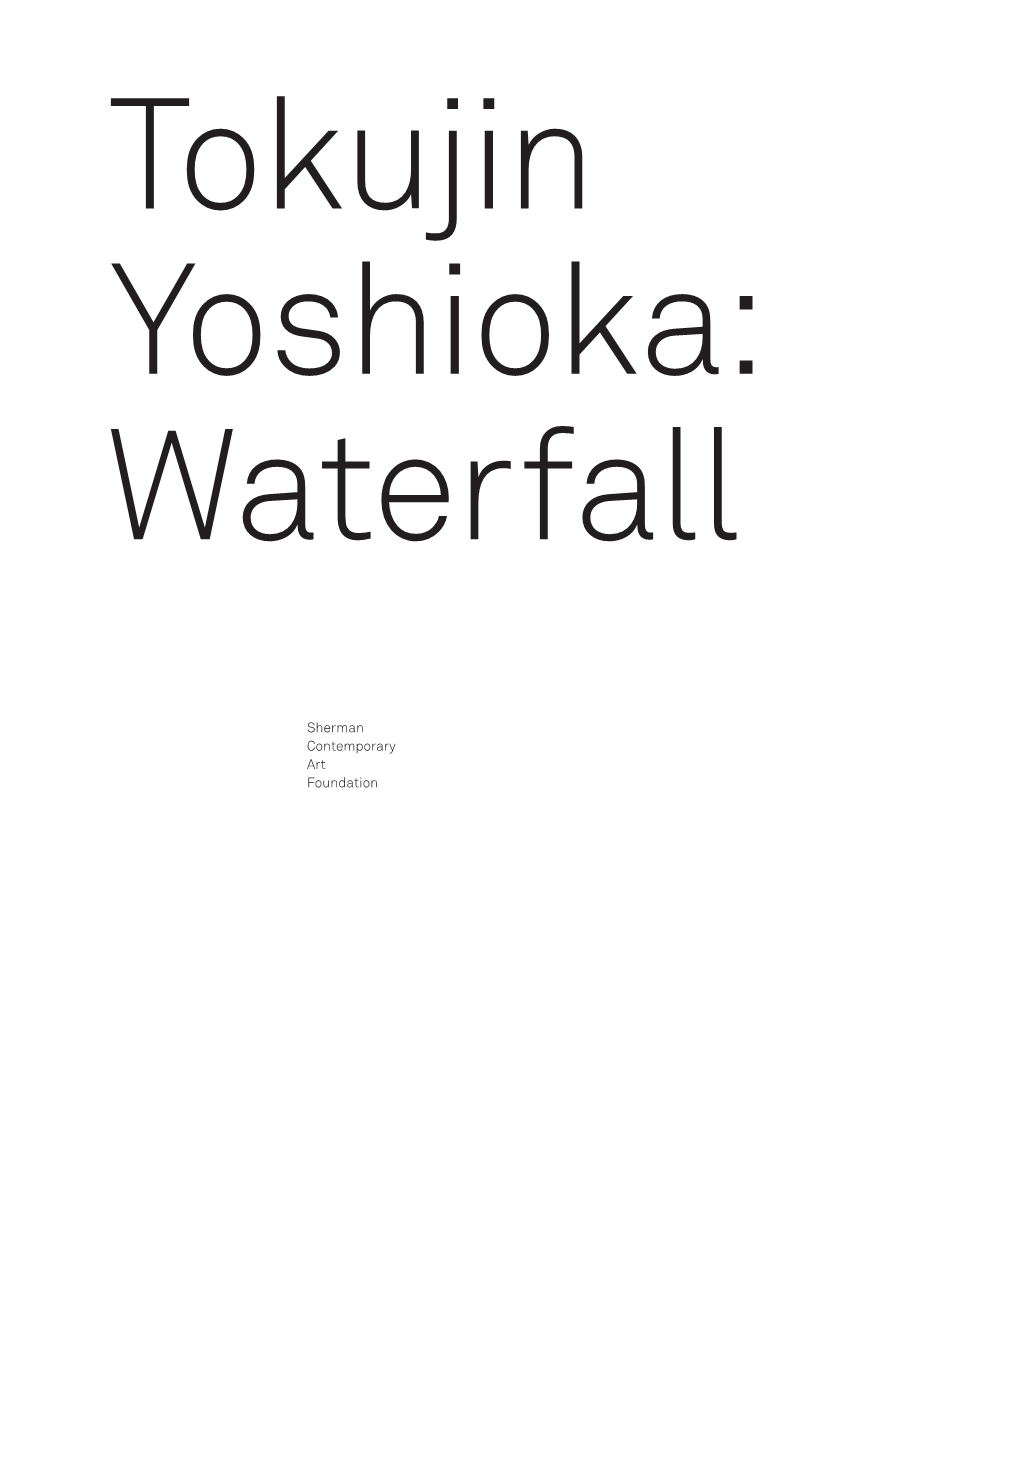 Tokujinyoshioka Waterfall.Pdf